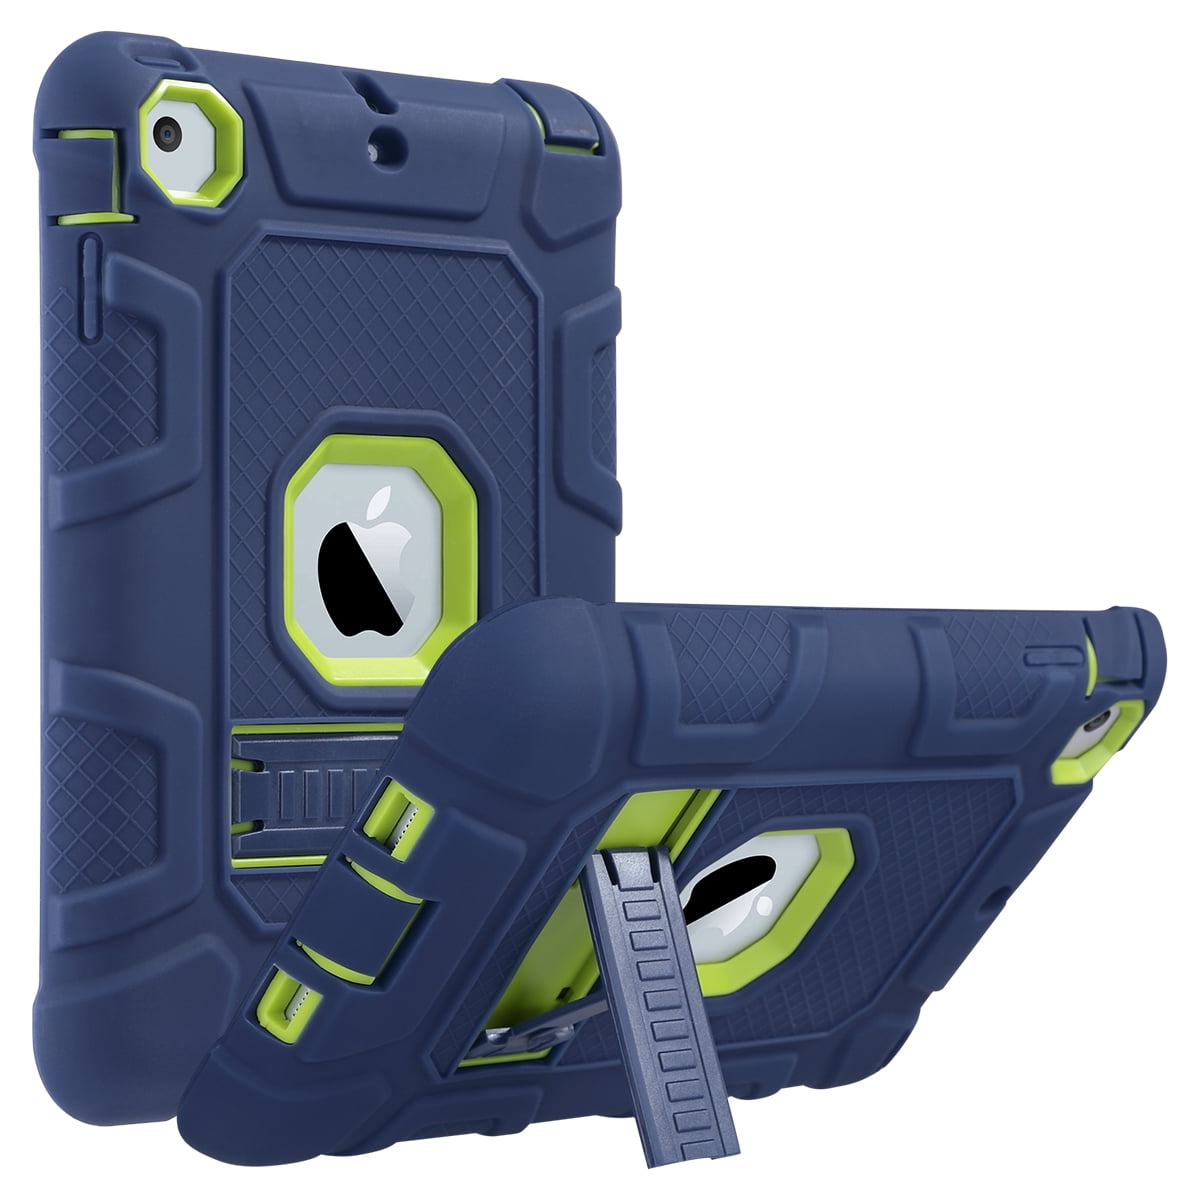 Mini 2 3 2 Stock iPad Skin Shockproof Protective Case Cover For Apple iPad 4 